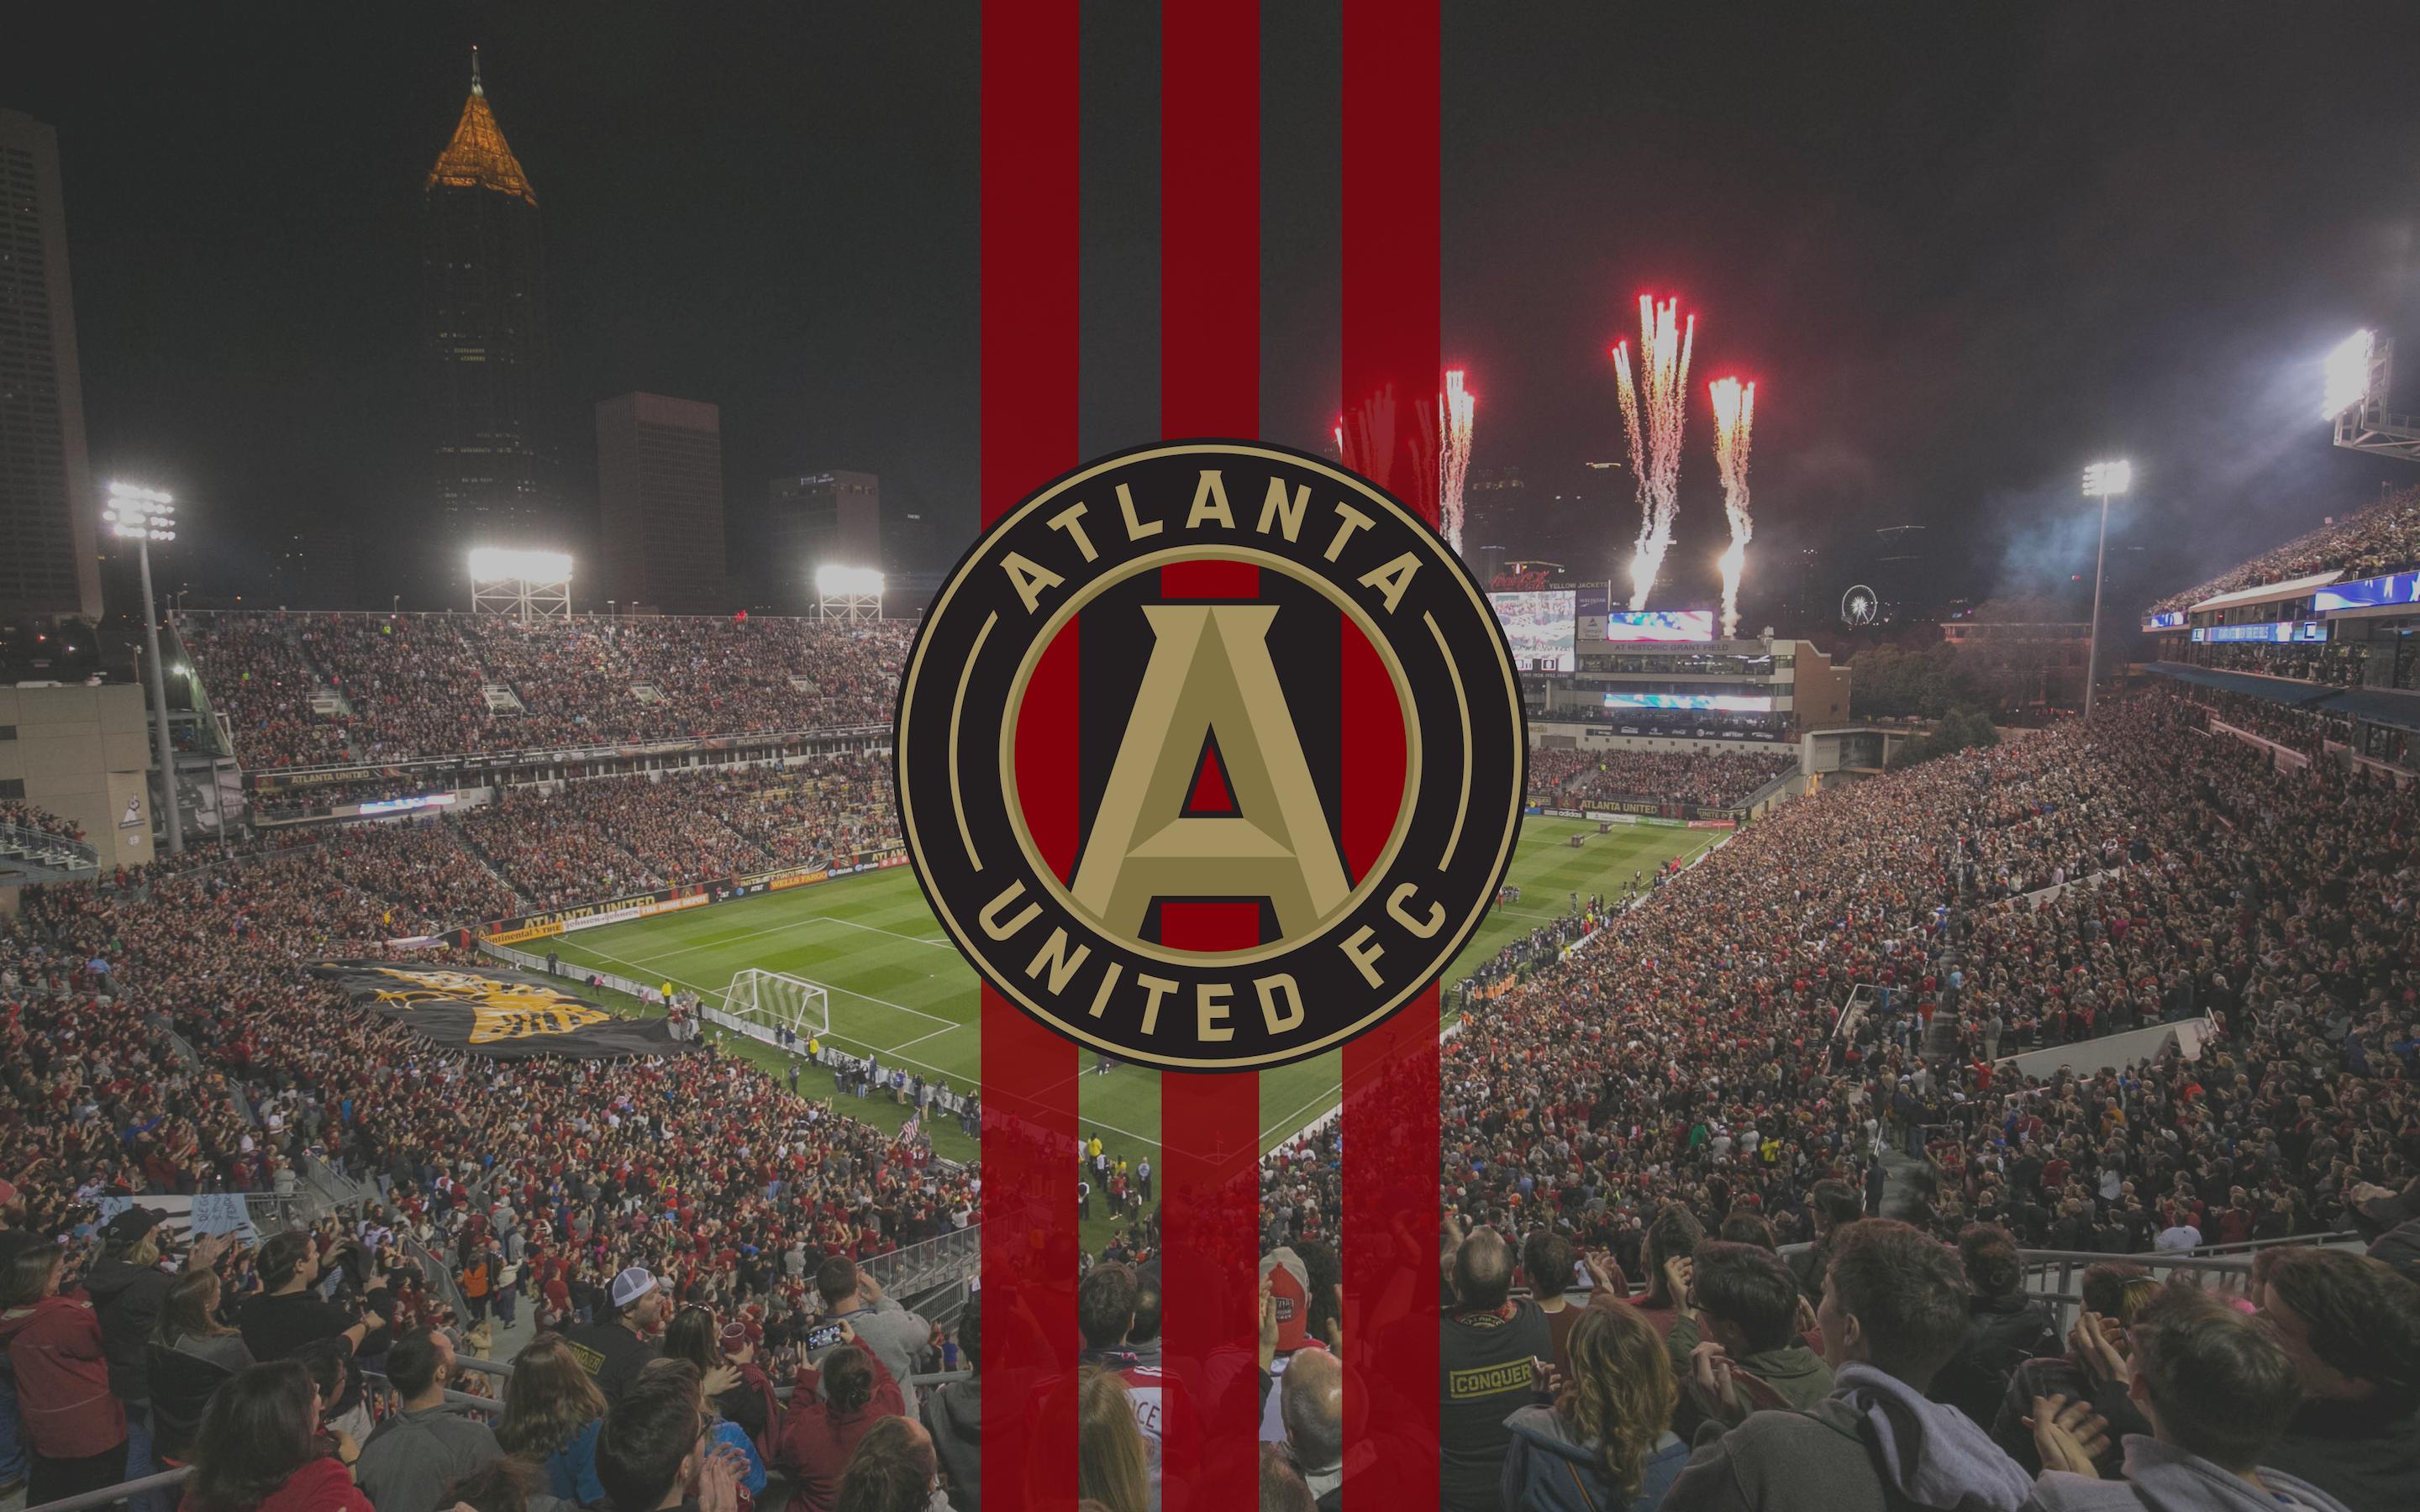 Atlanta United Fc Wallpapers